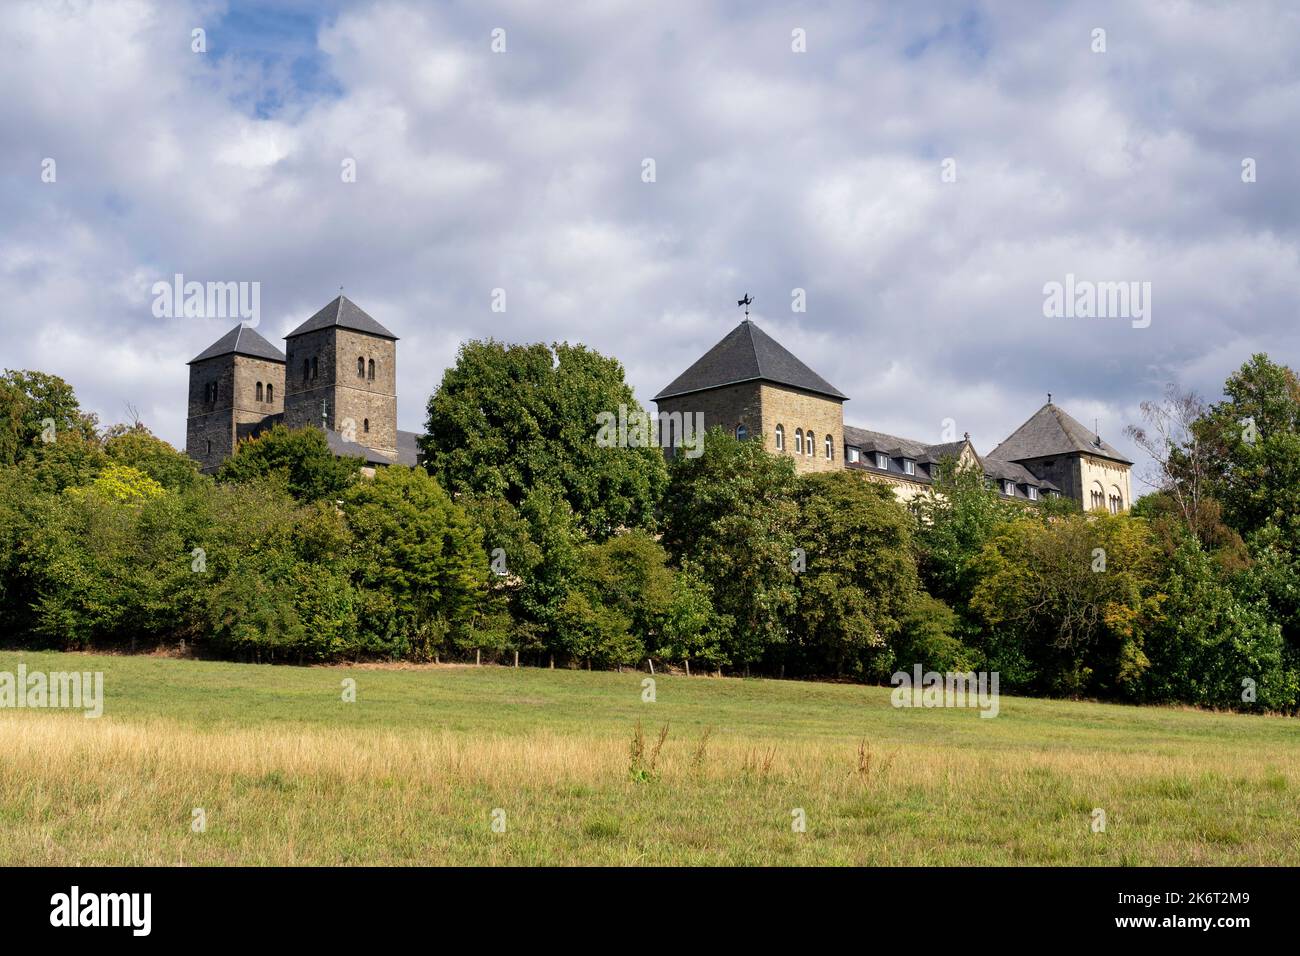 The monastery Gerleve Abbey near Coesfeld Stock Photo